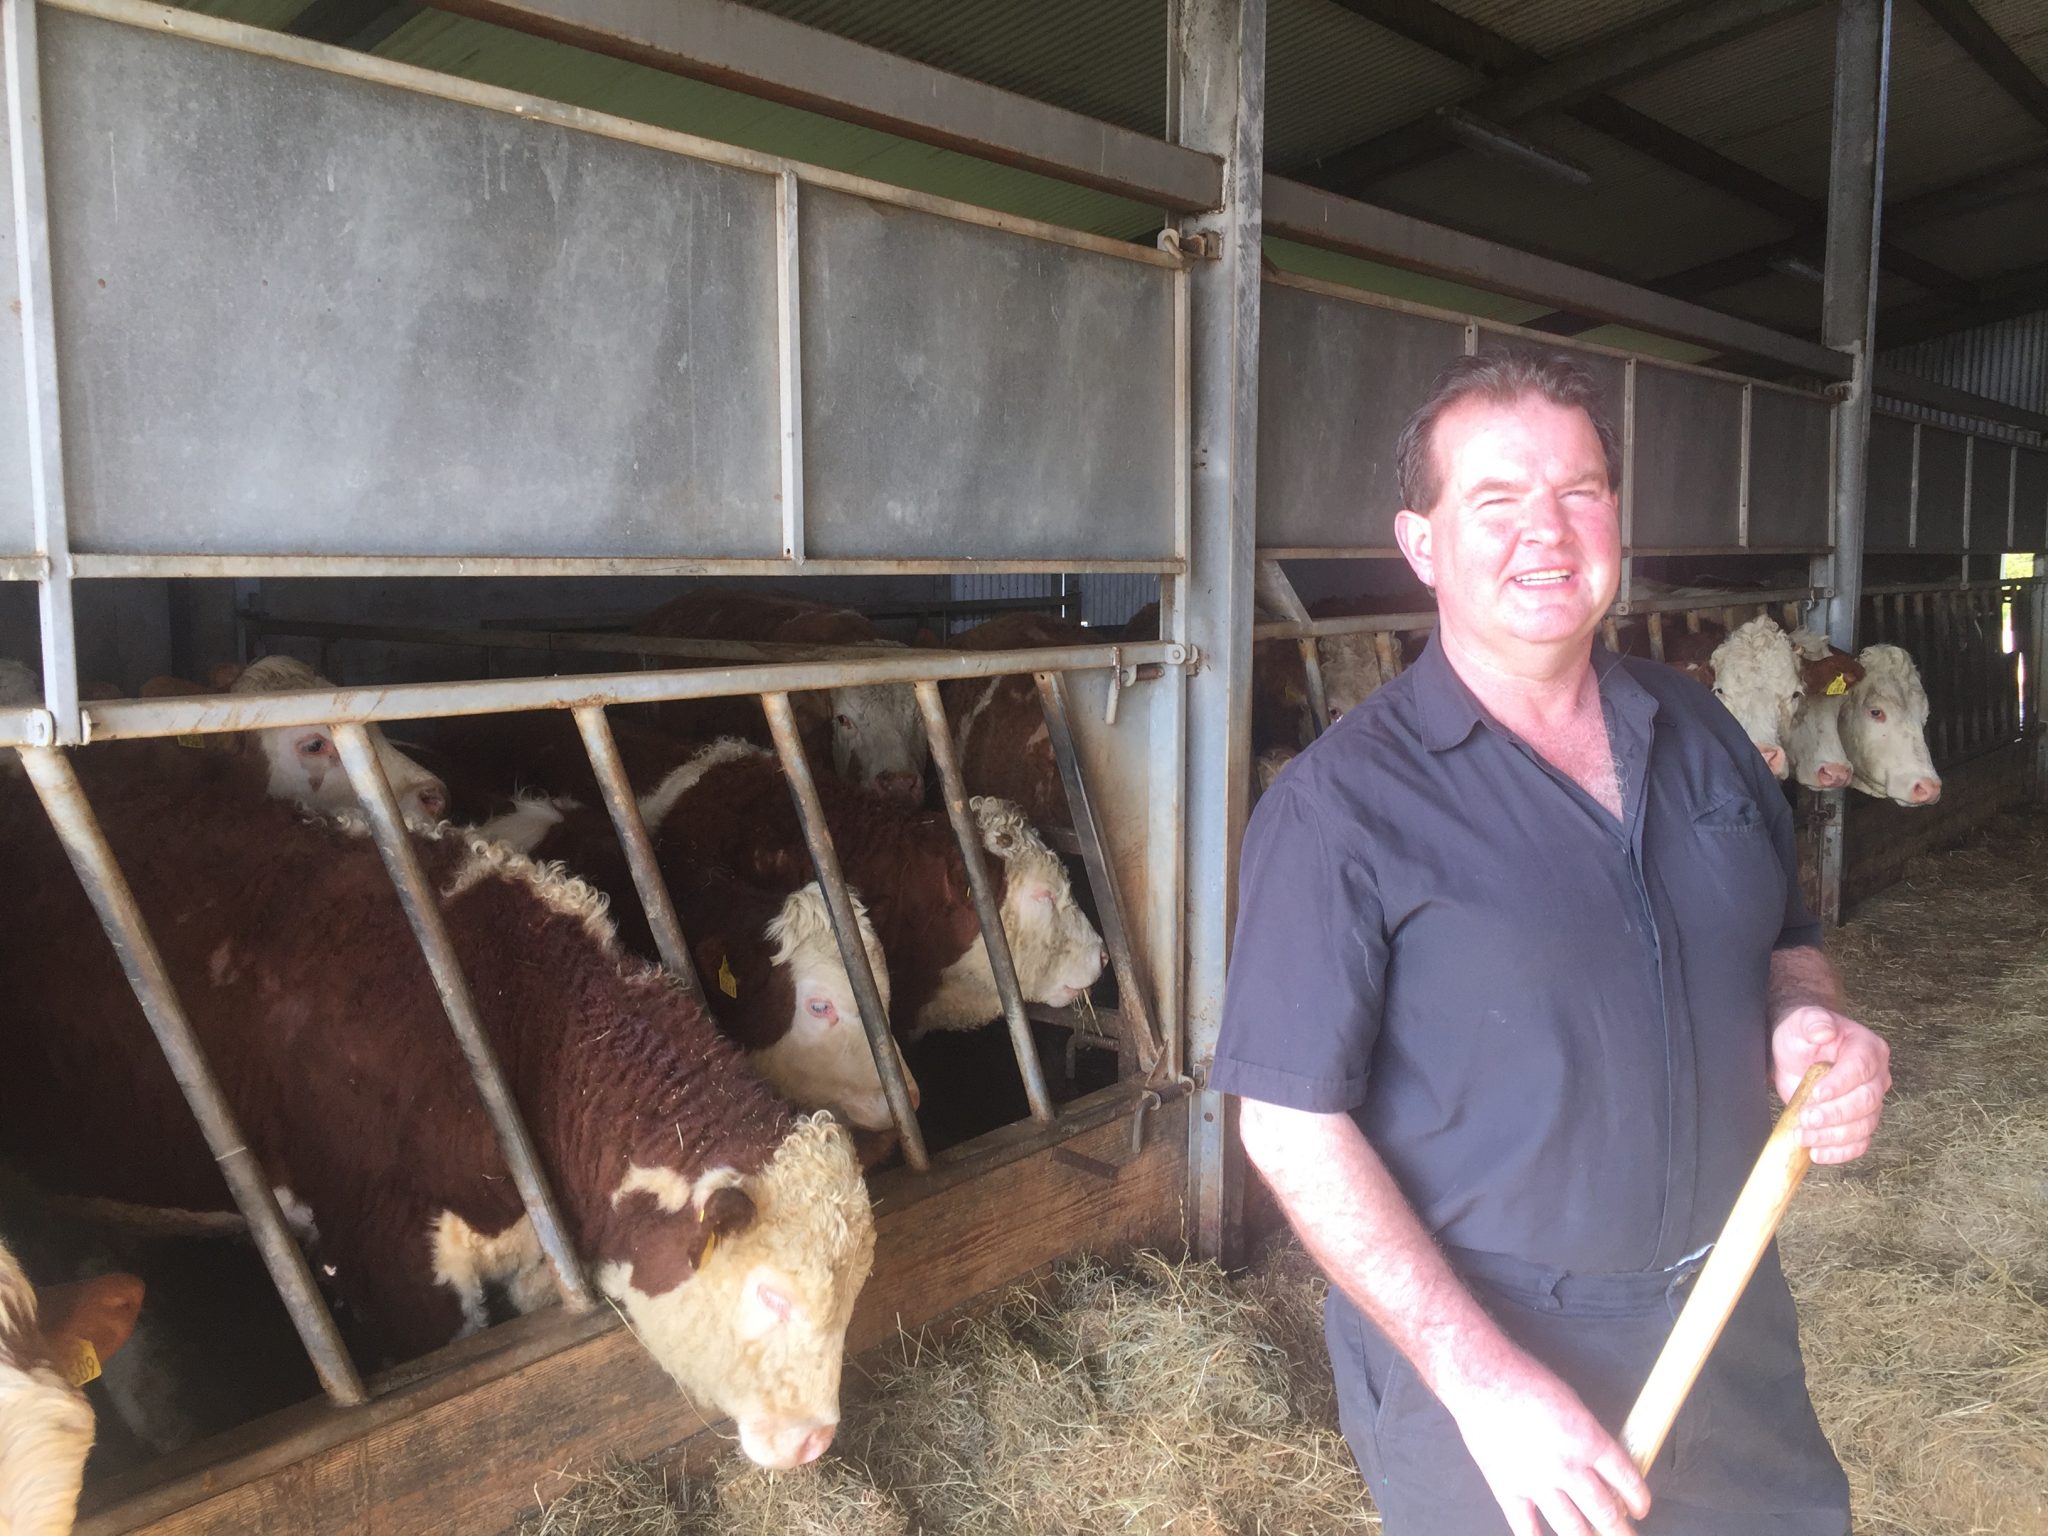 Patrick McMahon, 56 – Farmer, Conservationist, Volunteer